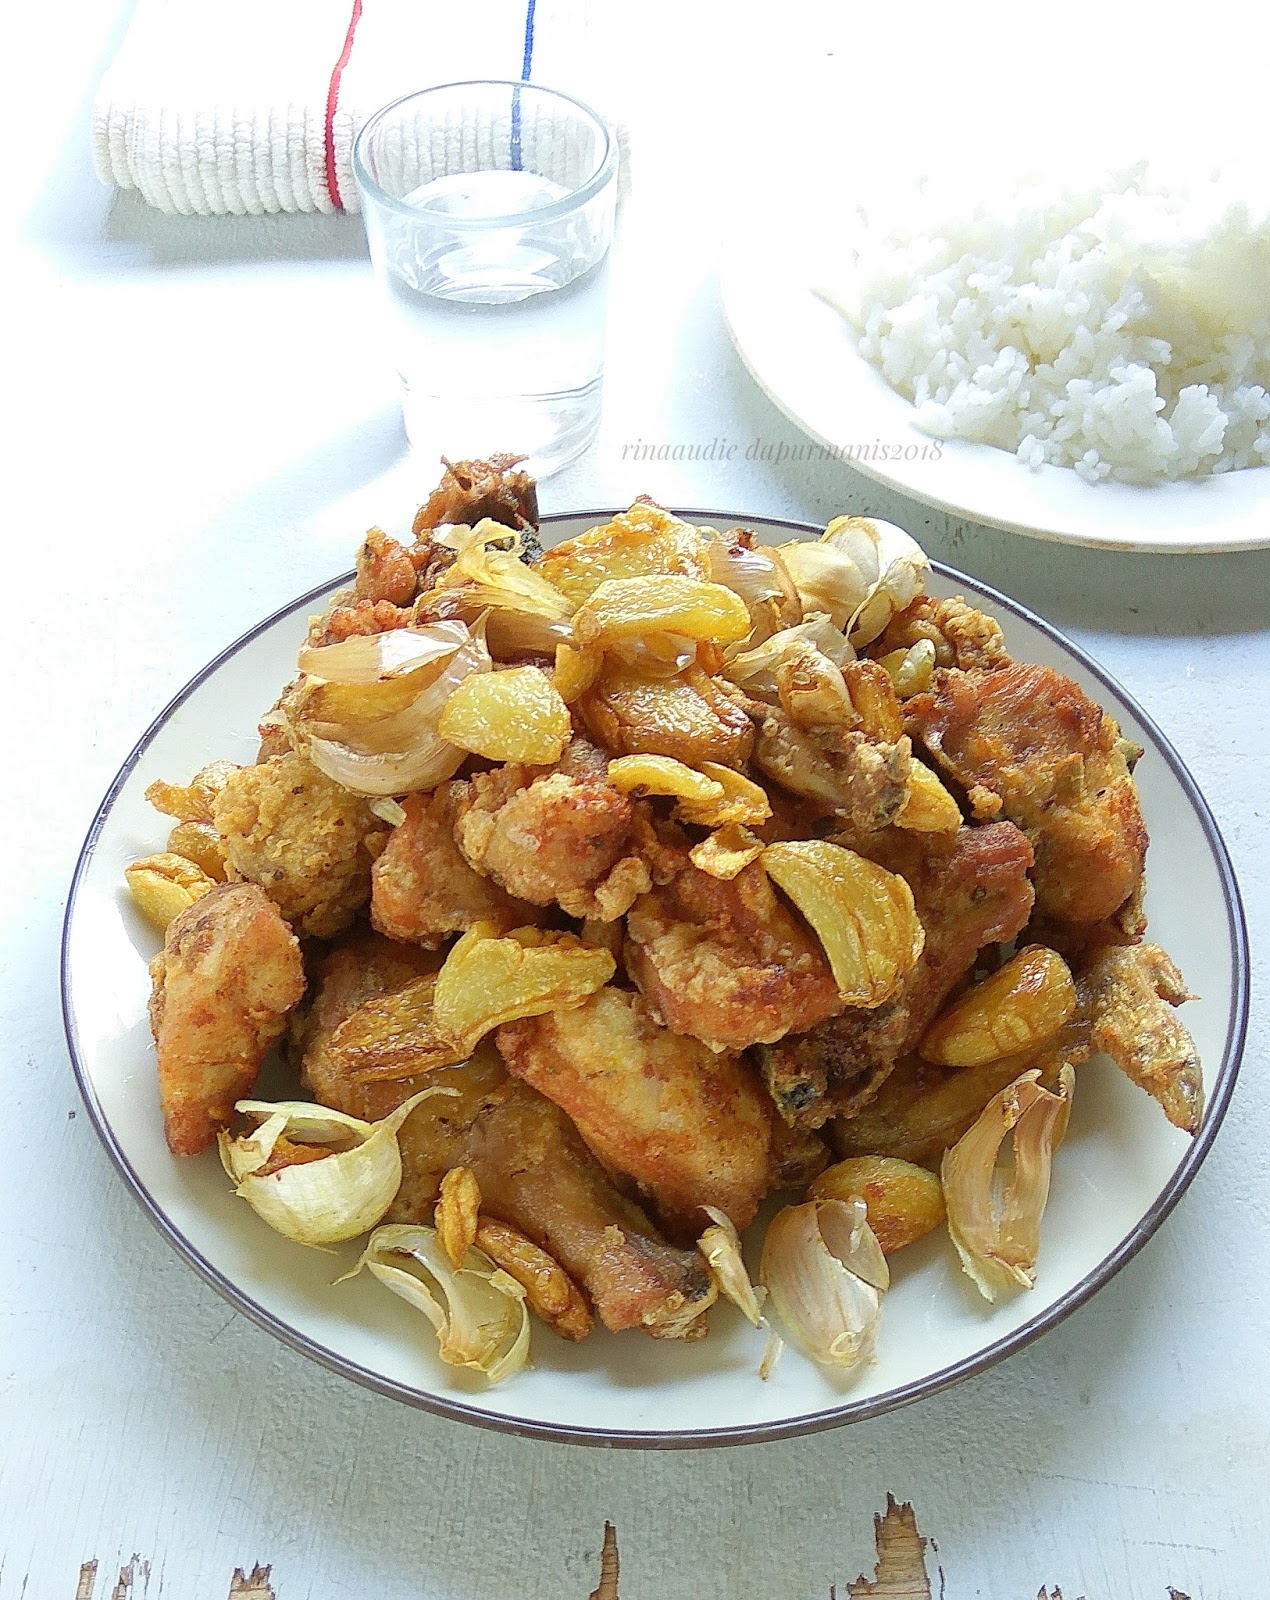 Resep Masak Ayam Goreng Bawang Putih yang Sedang Viral di TikTok